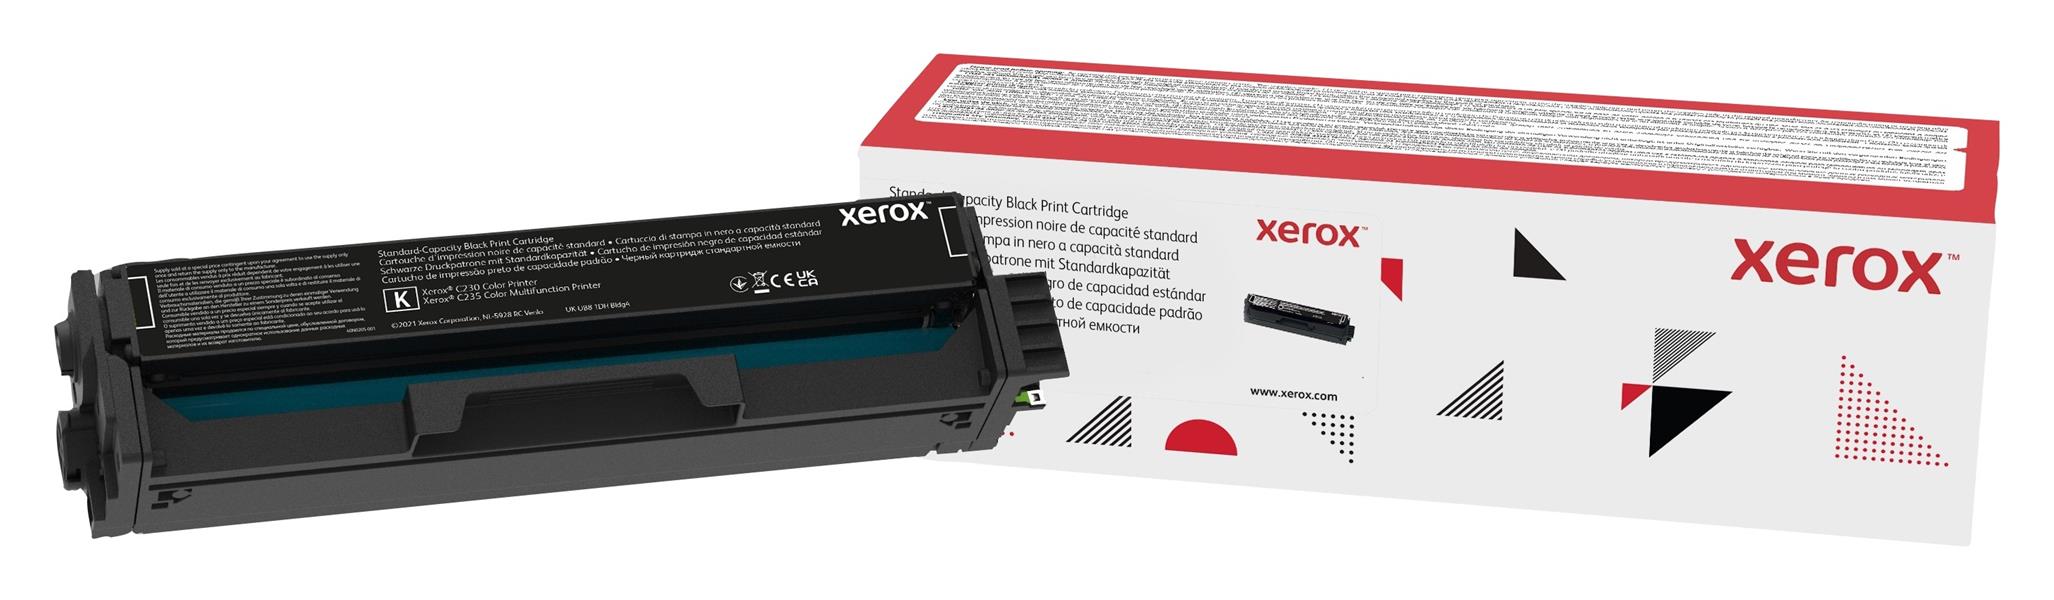 Xerox C230/C235 standaard capaciteit tonercassette, zwart (1.500 paginas)